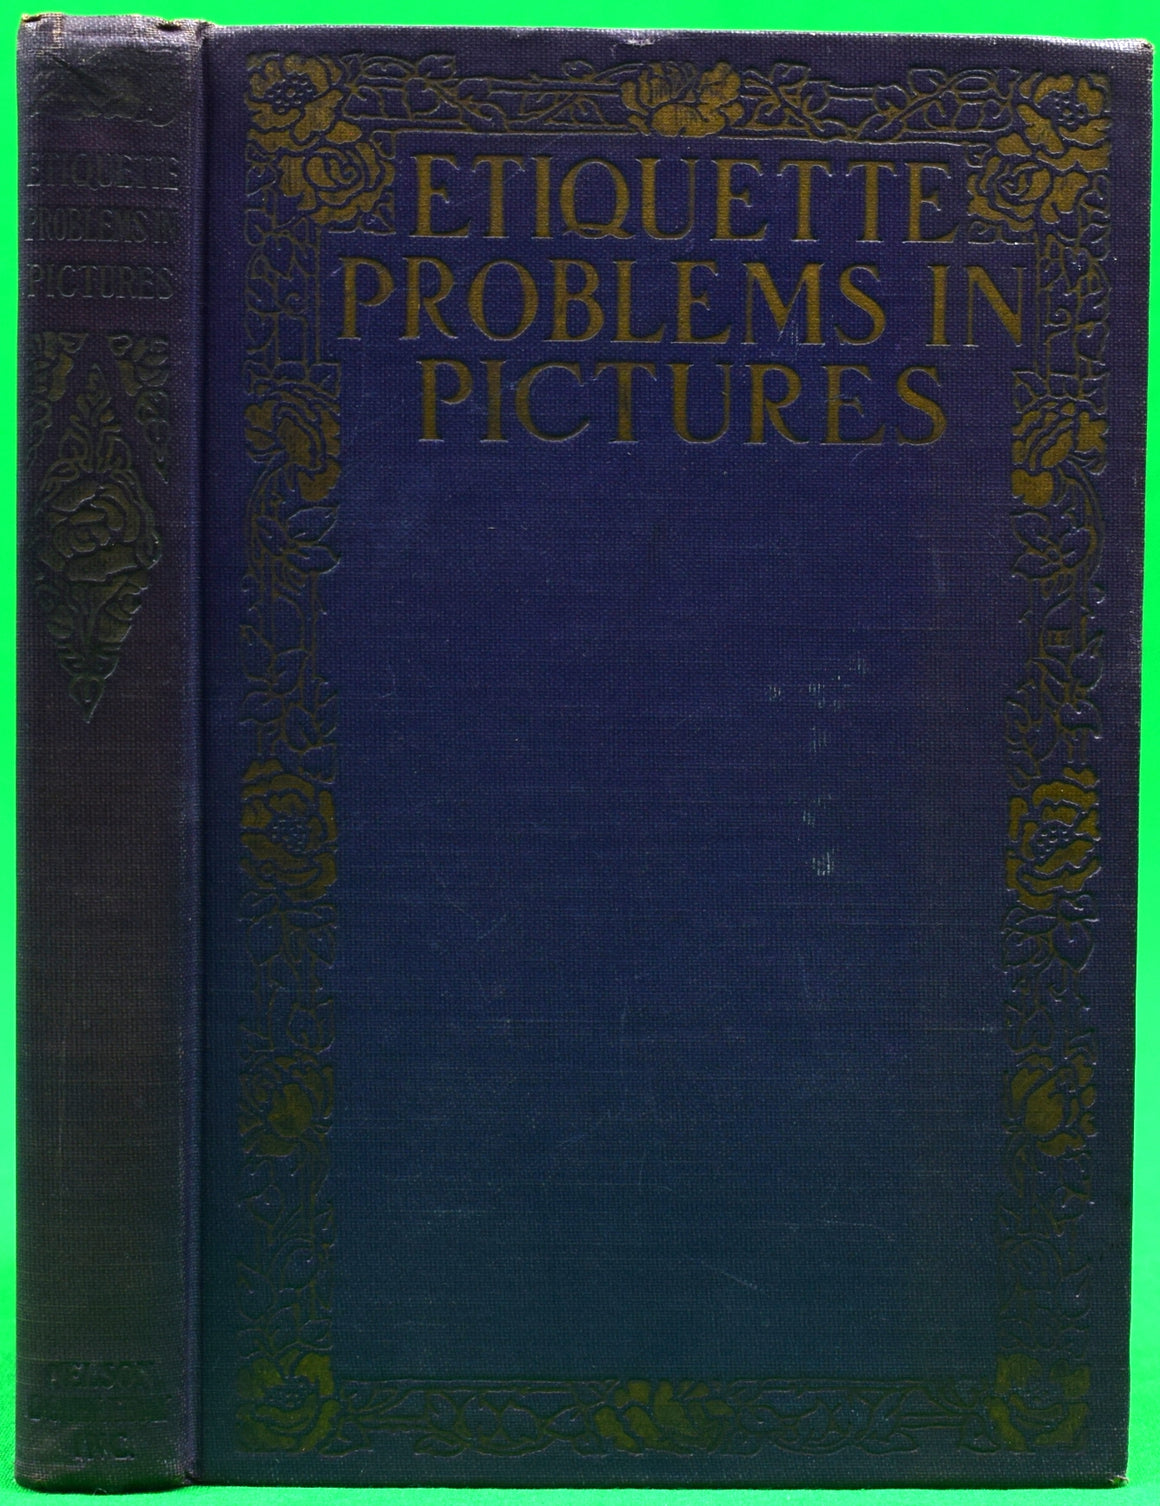 "Etiquette Problems In Pictures" 1924 EICHLER, Lillian